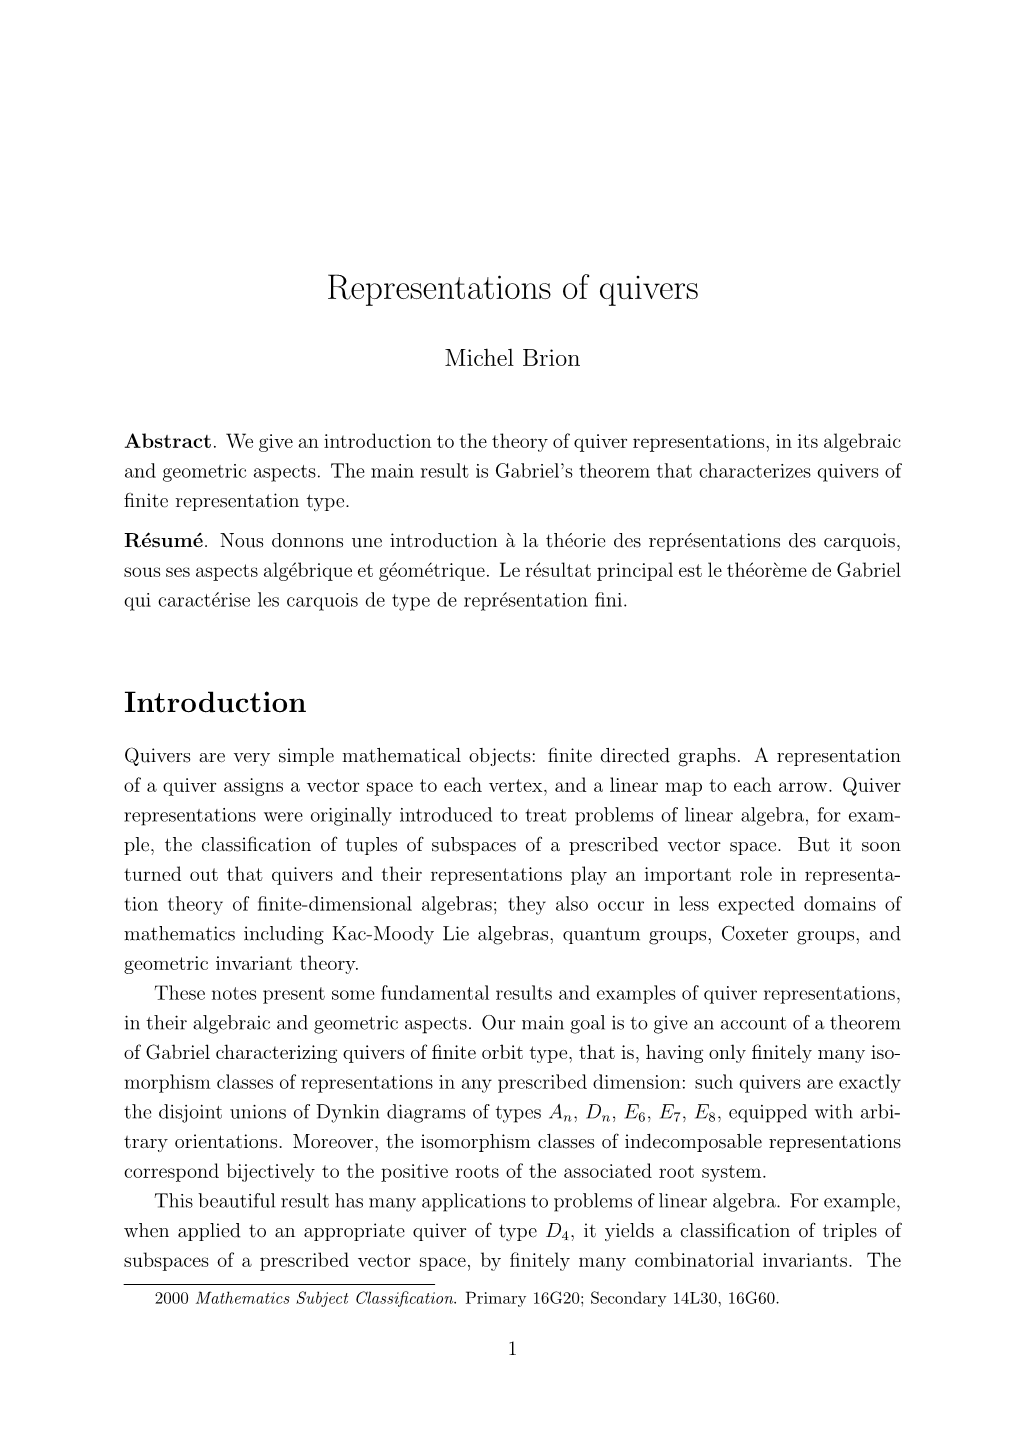 Representations of Quivers